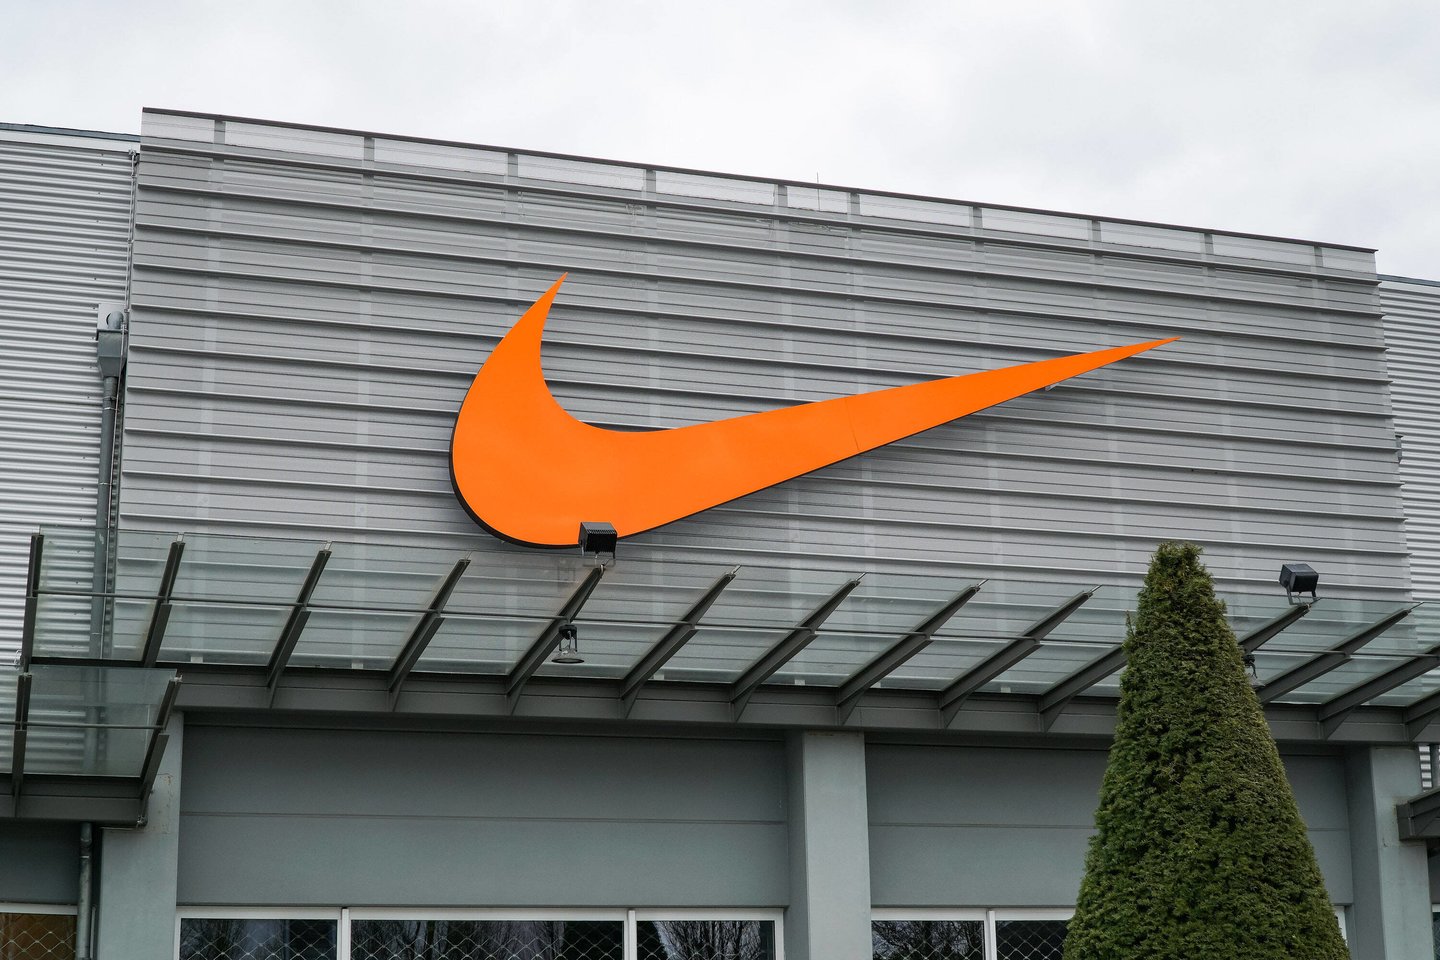  Prireikė laiko pagalvoti – „Nike“ nutraukė Maskvos „Sparak klubo rėmimą<br> imago images/foto2press/Scanpix nuotr.